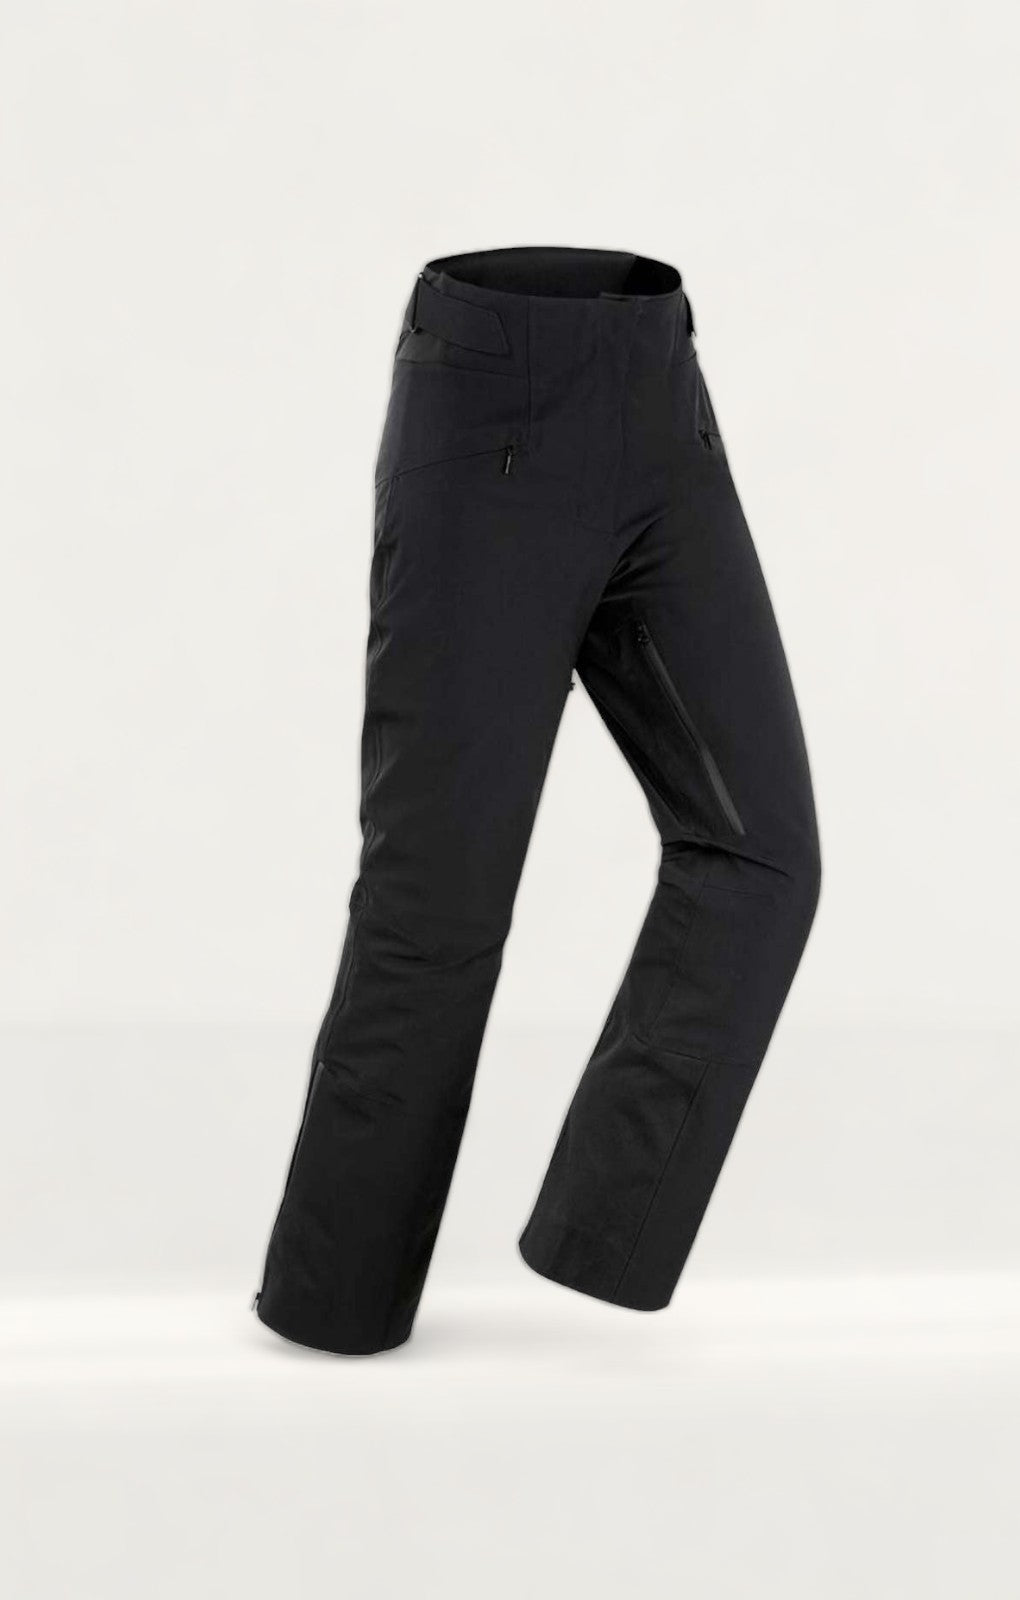 Decathlon Black Women's Piste Ski Trousers product image